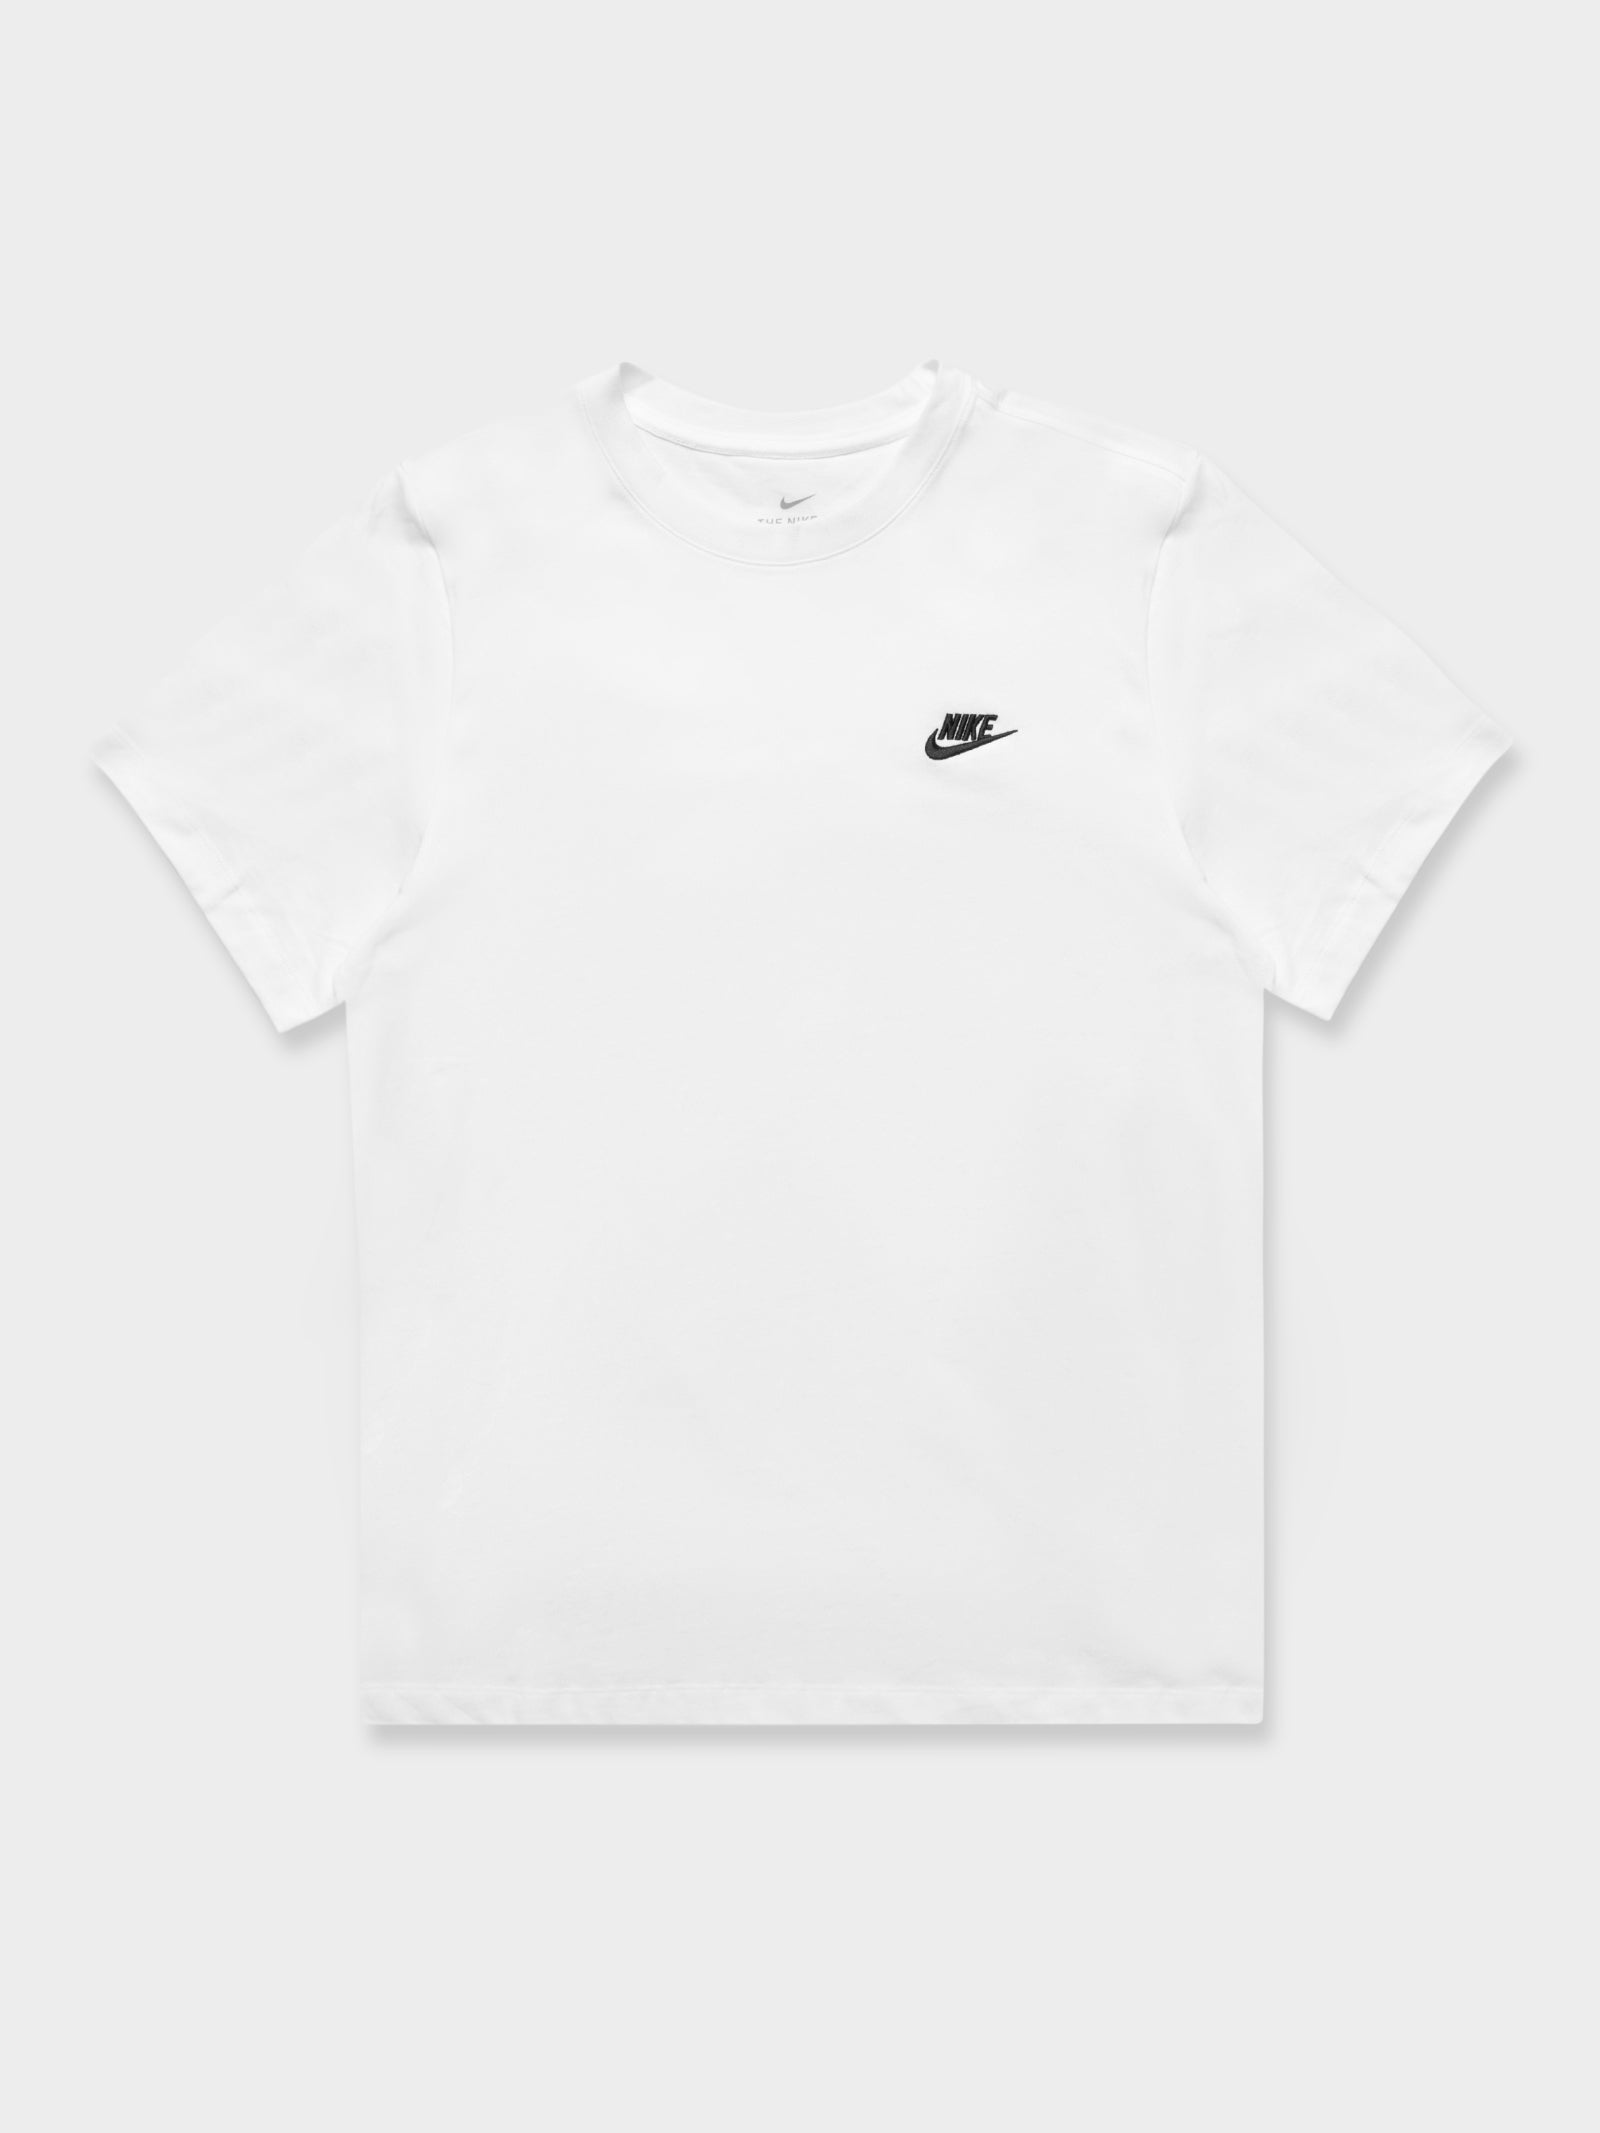 Sportswear Club T-Shirt in White & Black - Glue Store